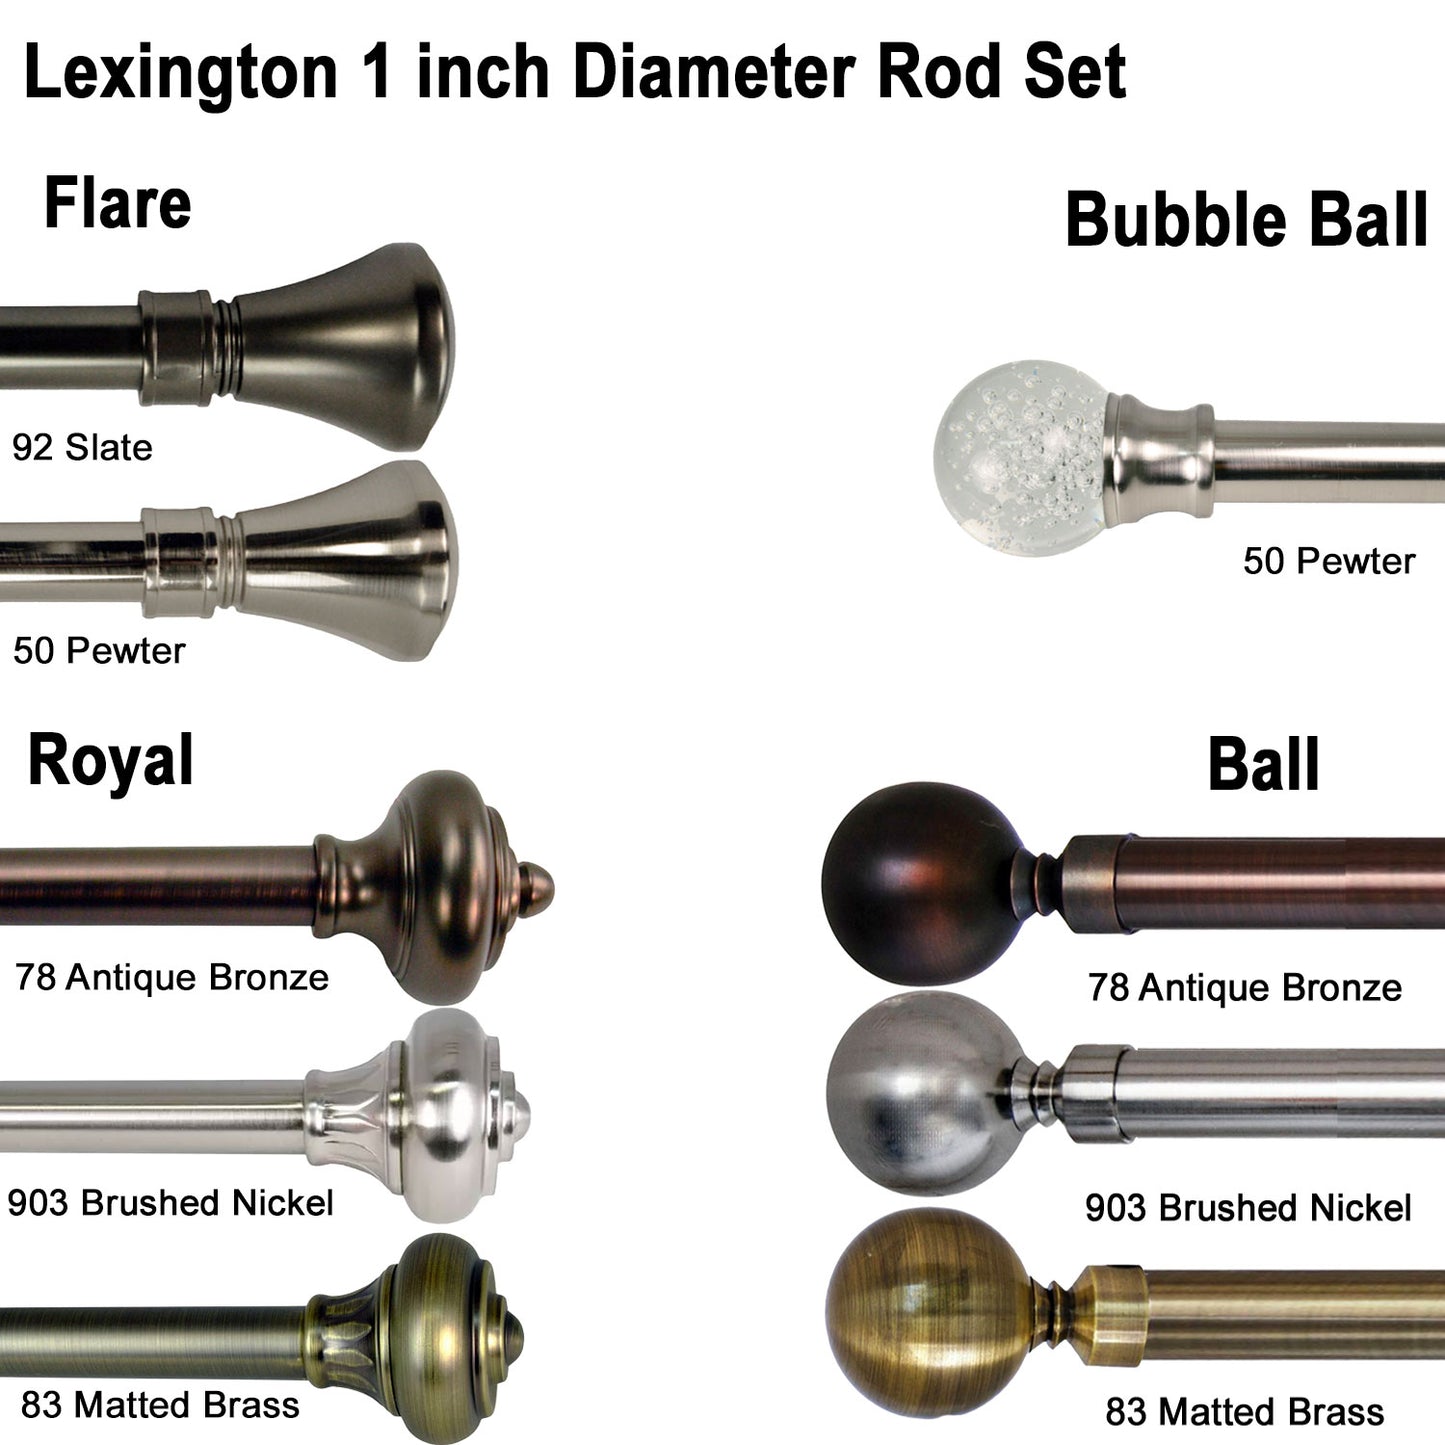 Lexington 1 inch Diameter Rod Set